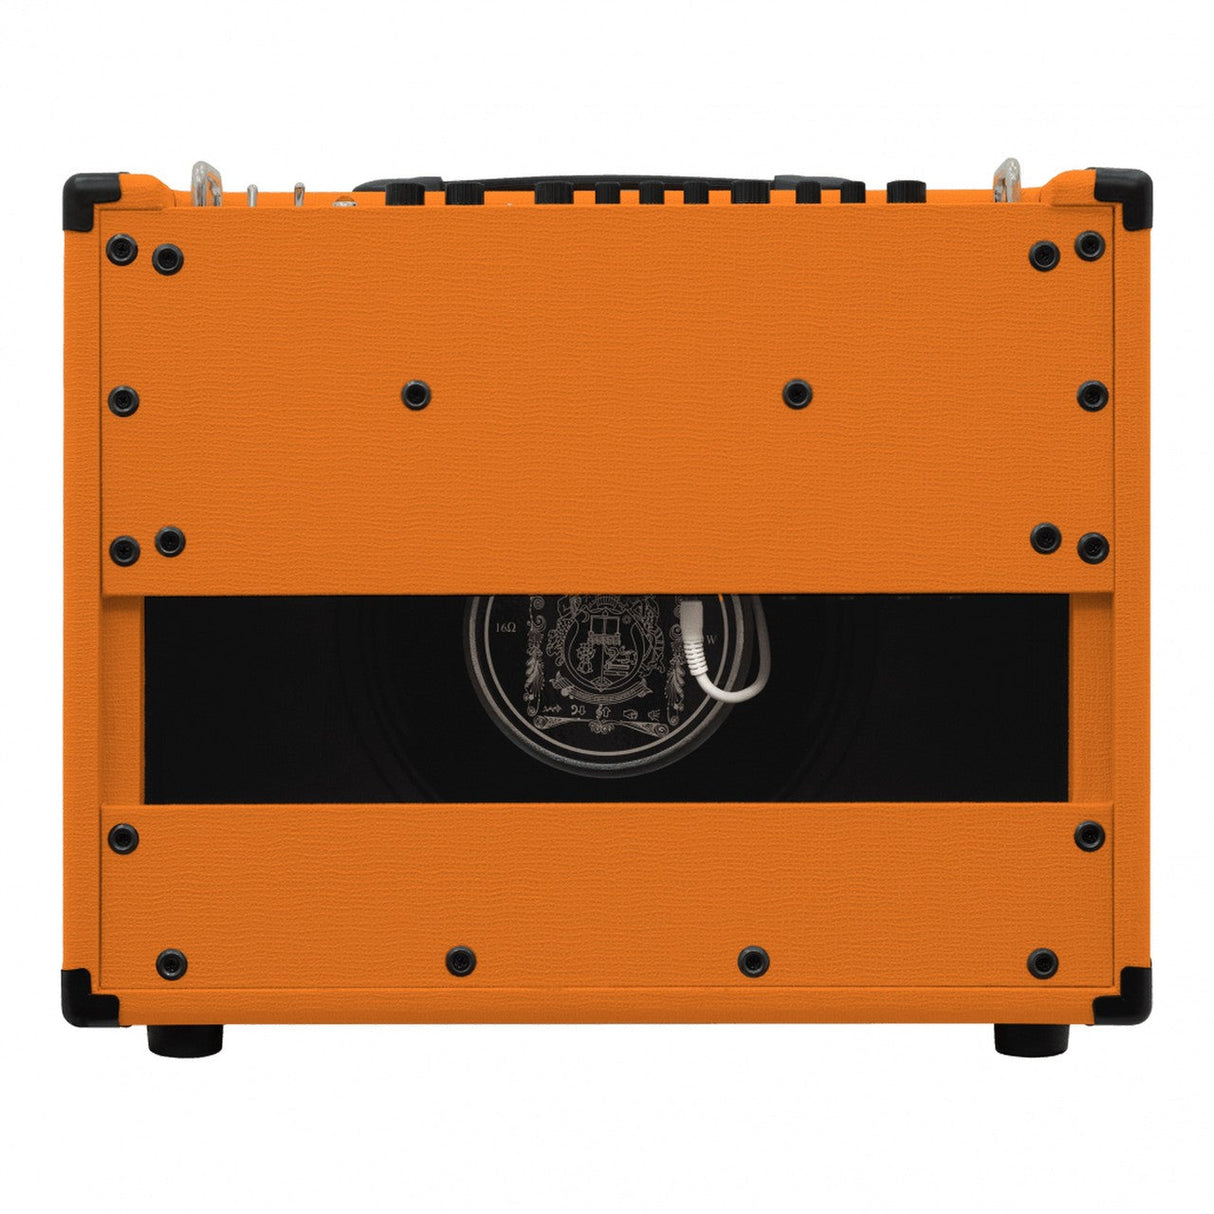 Orange Crush Pro 60 Combo | 1 x 12 Inch 60W Guitar Amplifier (Used)